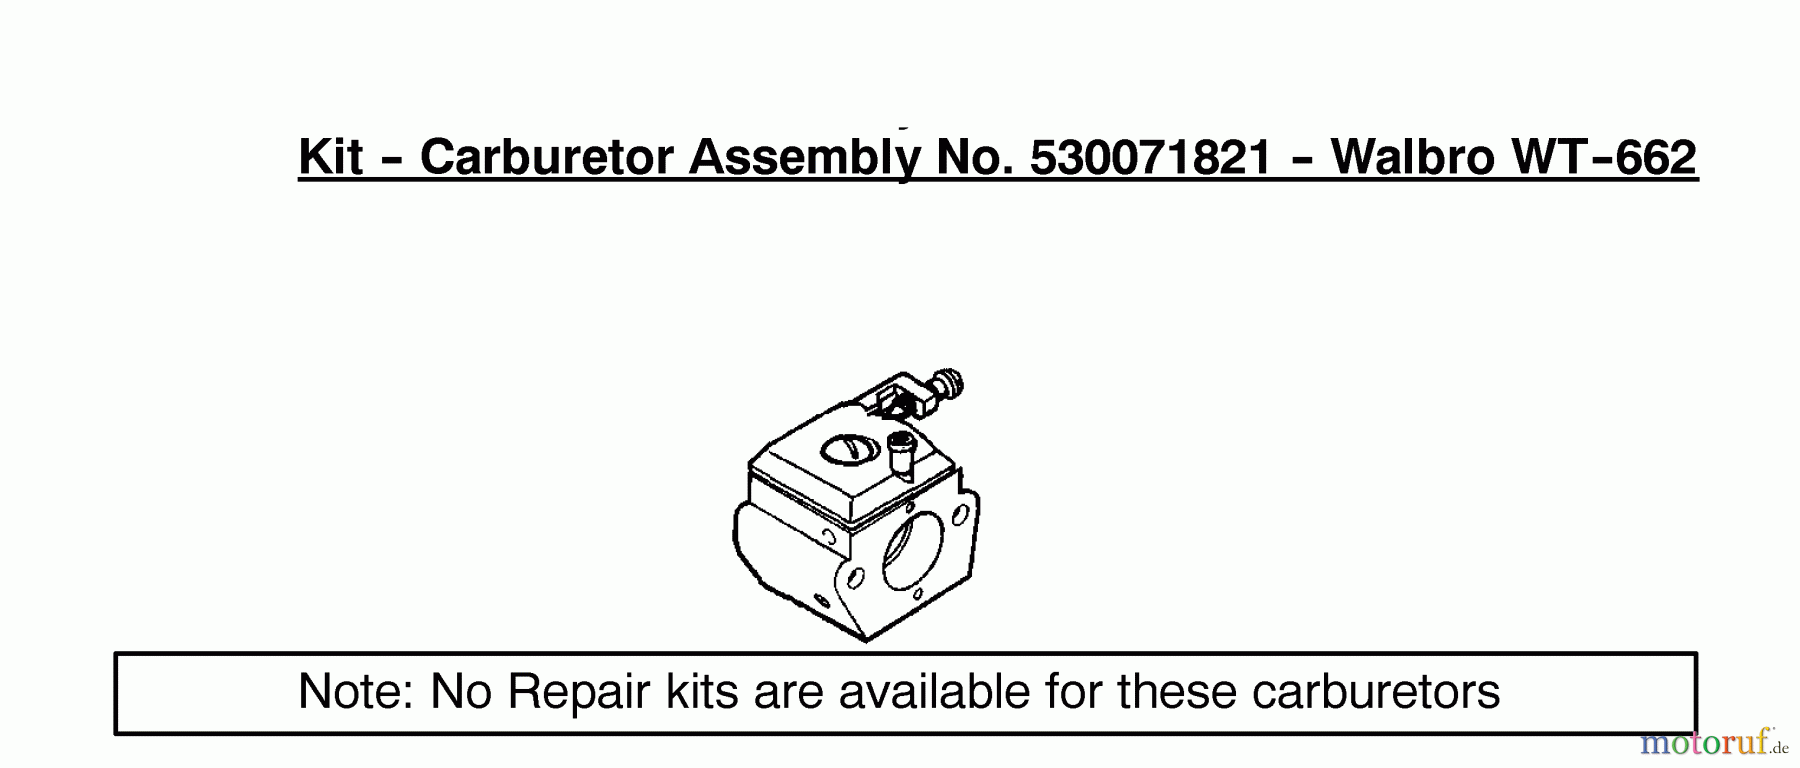  Poulan / Weed Eater Motorsägen 2550LE (Type 2) - Poulan Woodmaster Chainsaw Carburetor Assembly Kit (Walbro WT-662) 530071821